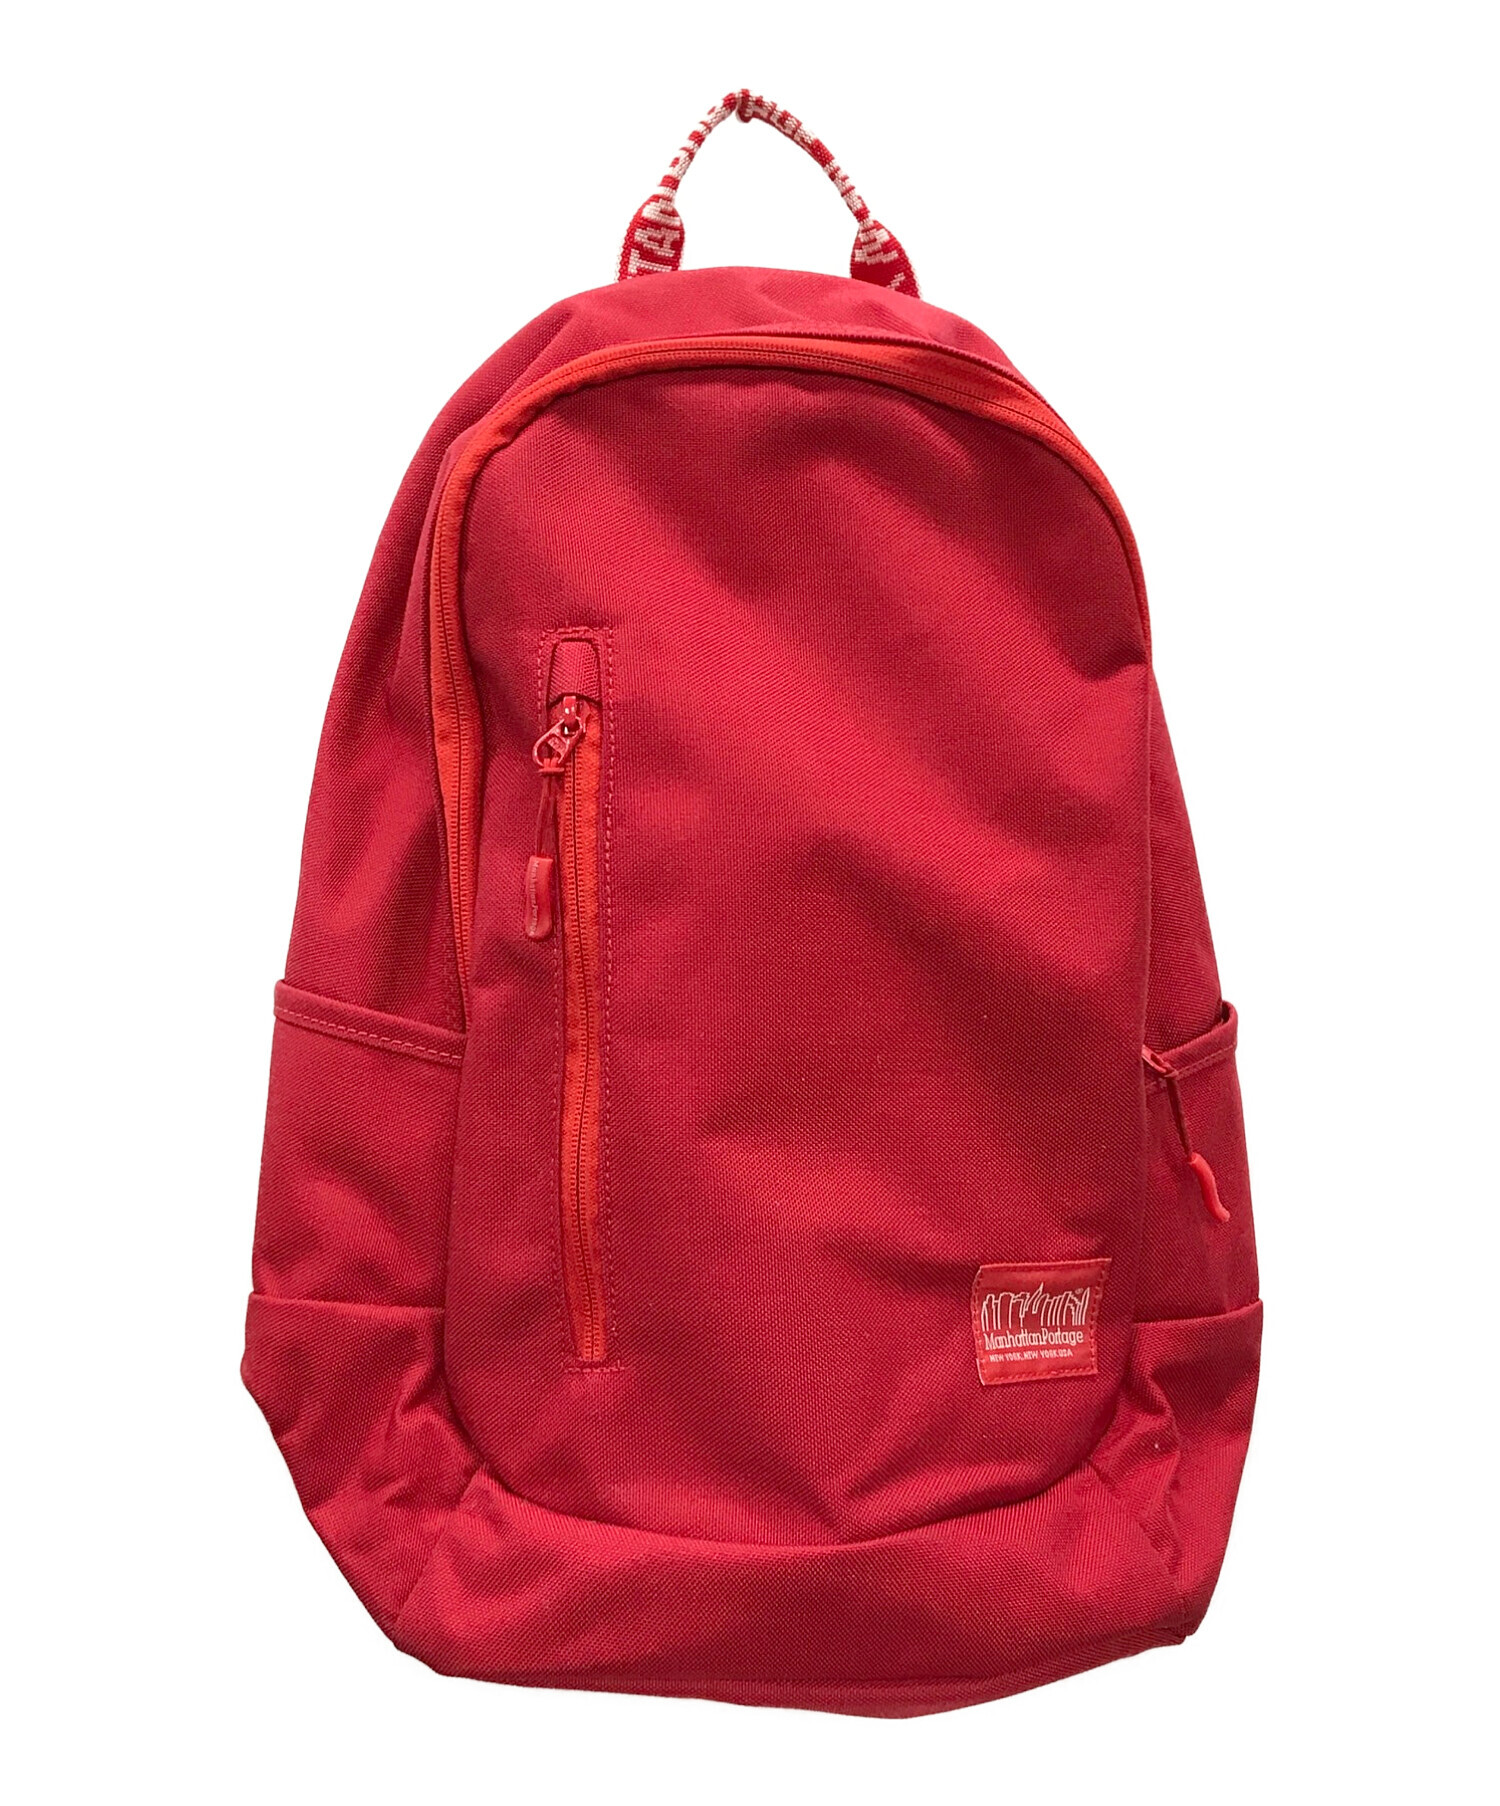 Manhattan Portage backpack 赤タグなし